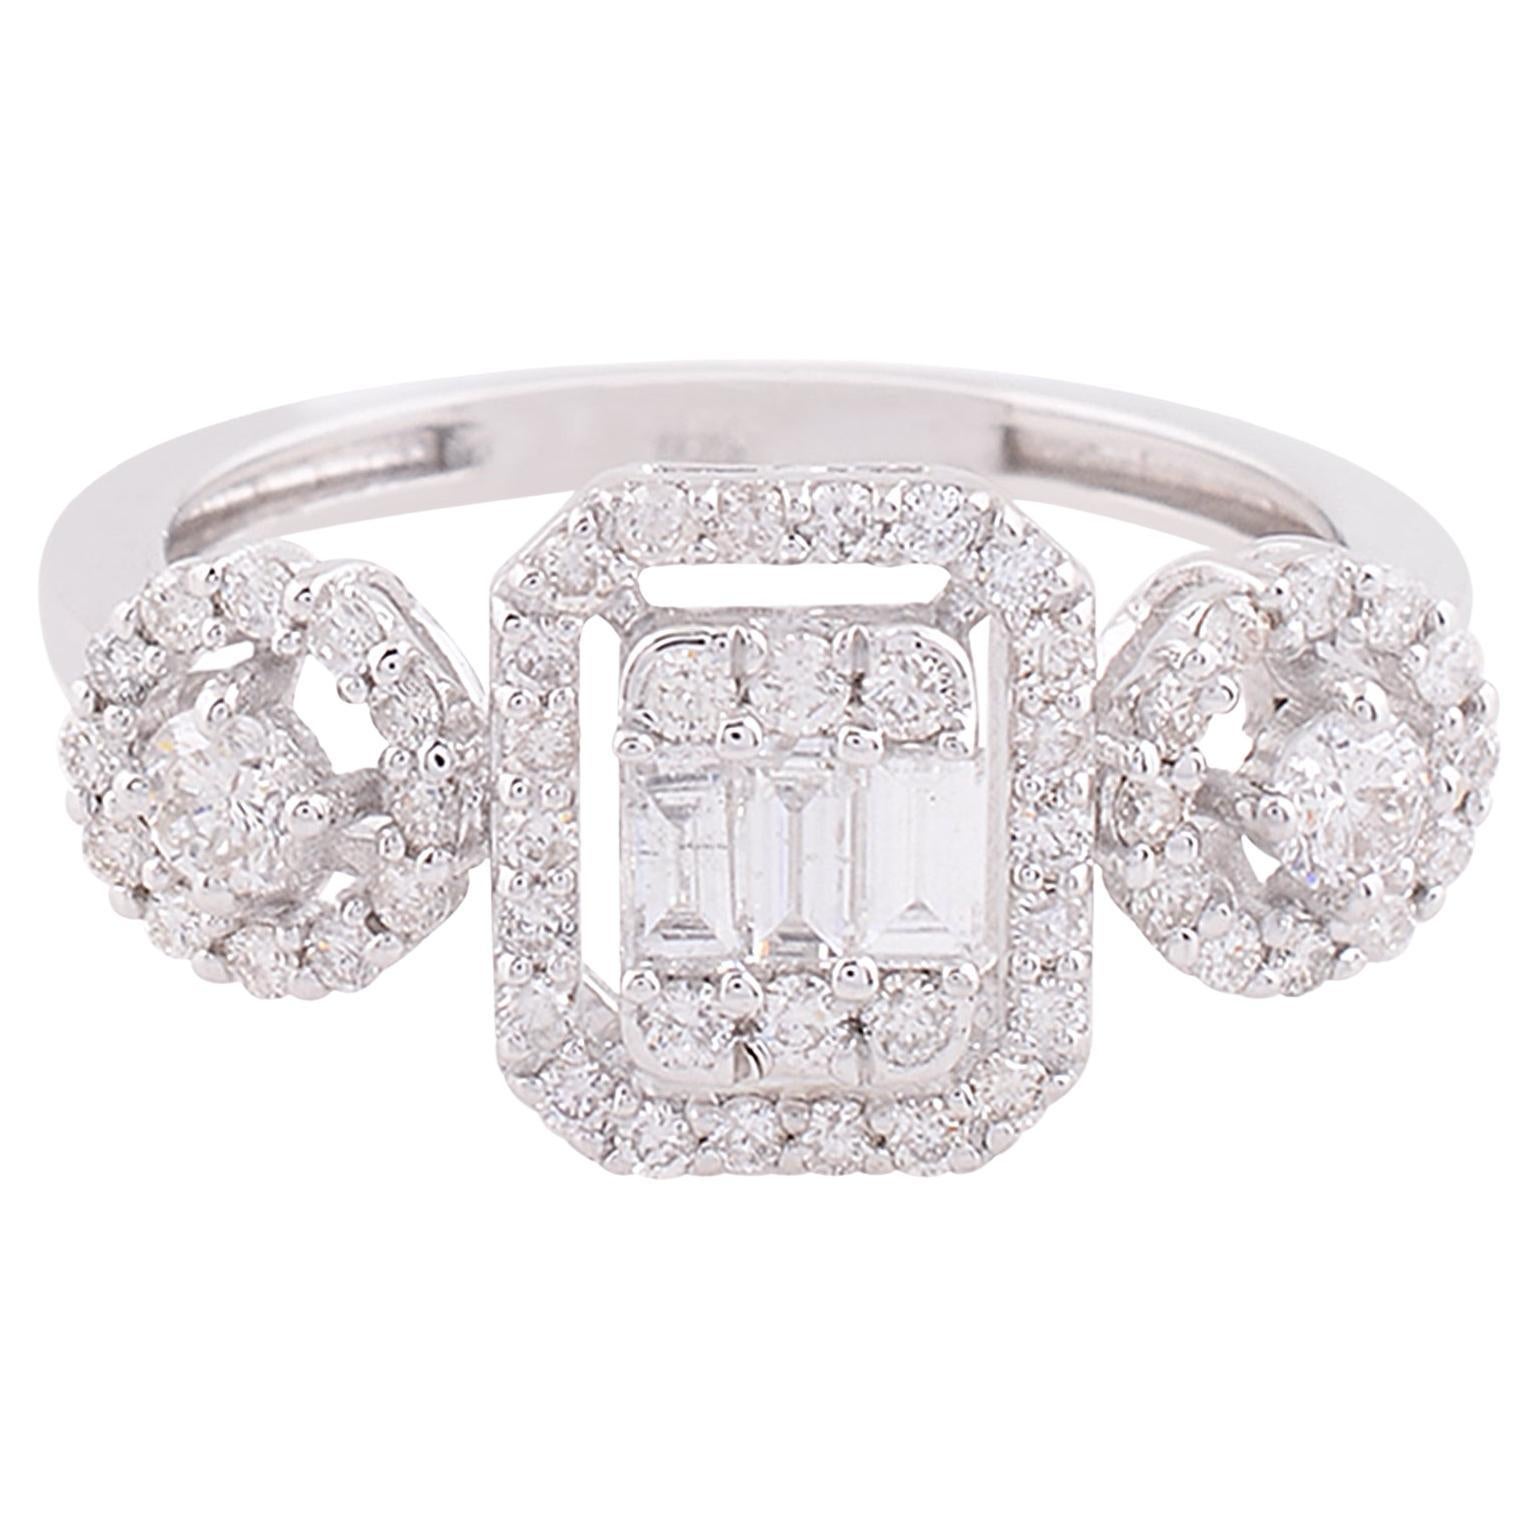 For Sale:  0.76 Carat SI Clarity HI Color Baguette Diamond Ring 18 Karat White Gold Jewelry